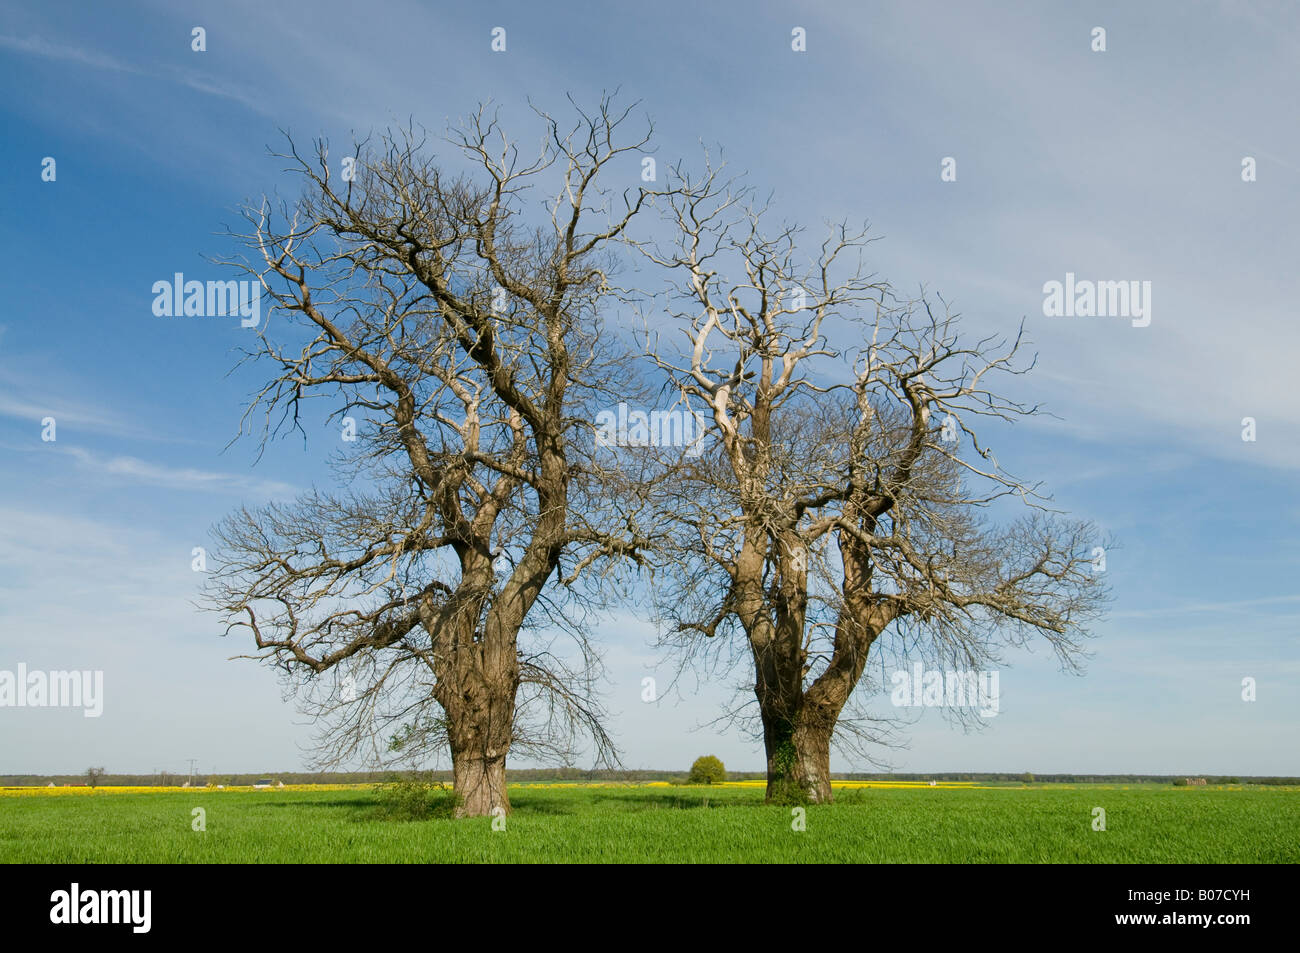 Spanish Chestnut trees - Castanea sativa with blight disease - Indre et Loire, France. Stock Photo